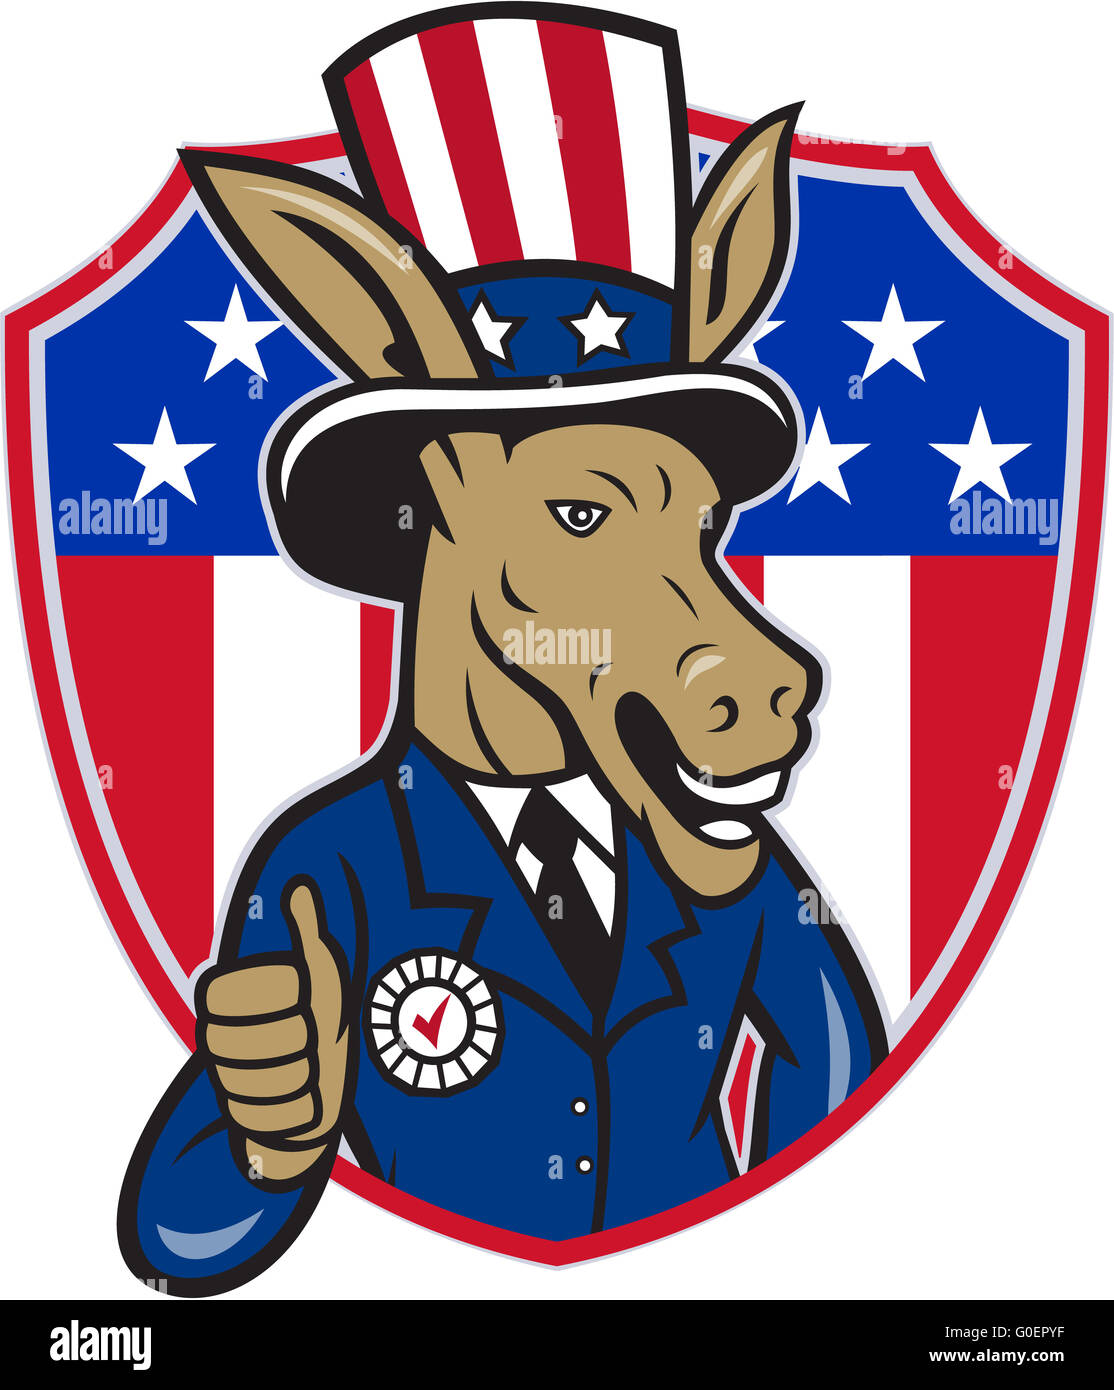 Democrat Donkey Mascot Thumbs Up Flag Cartoon Stock Photo